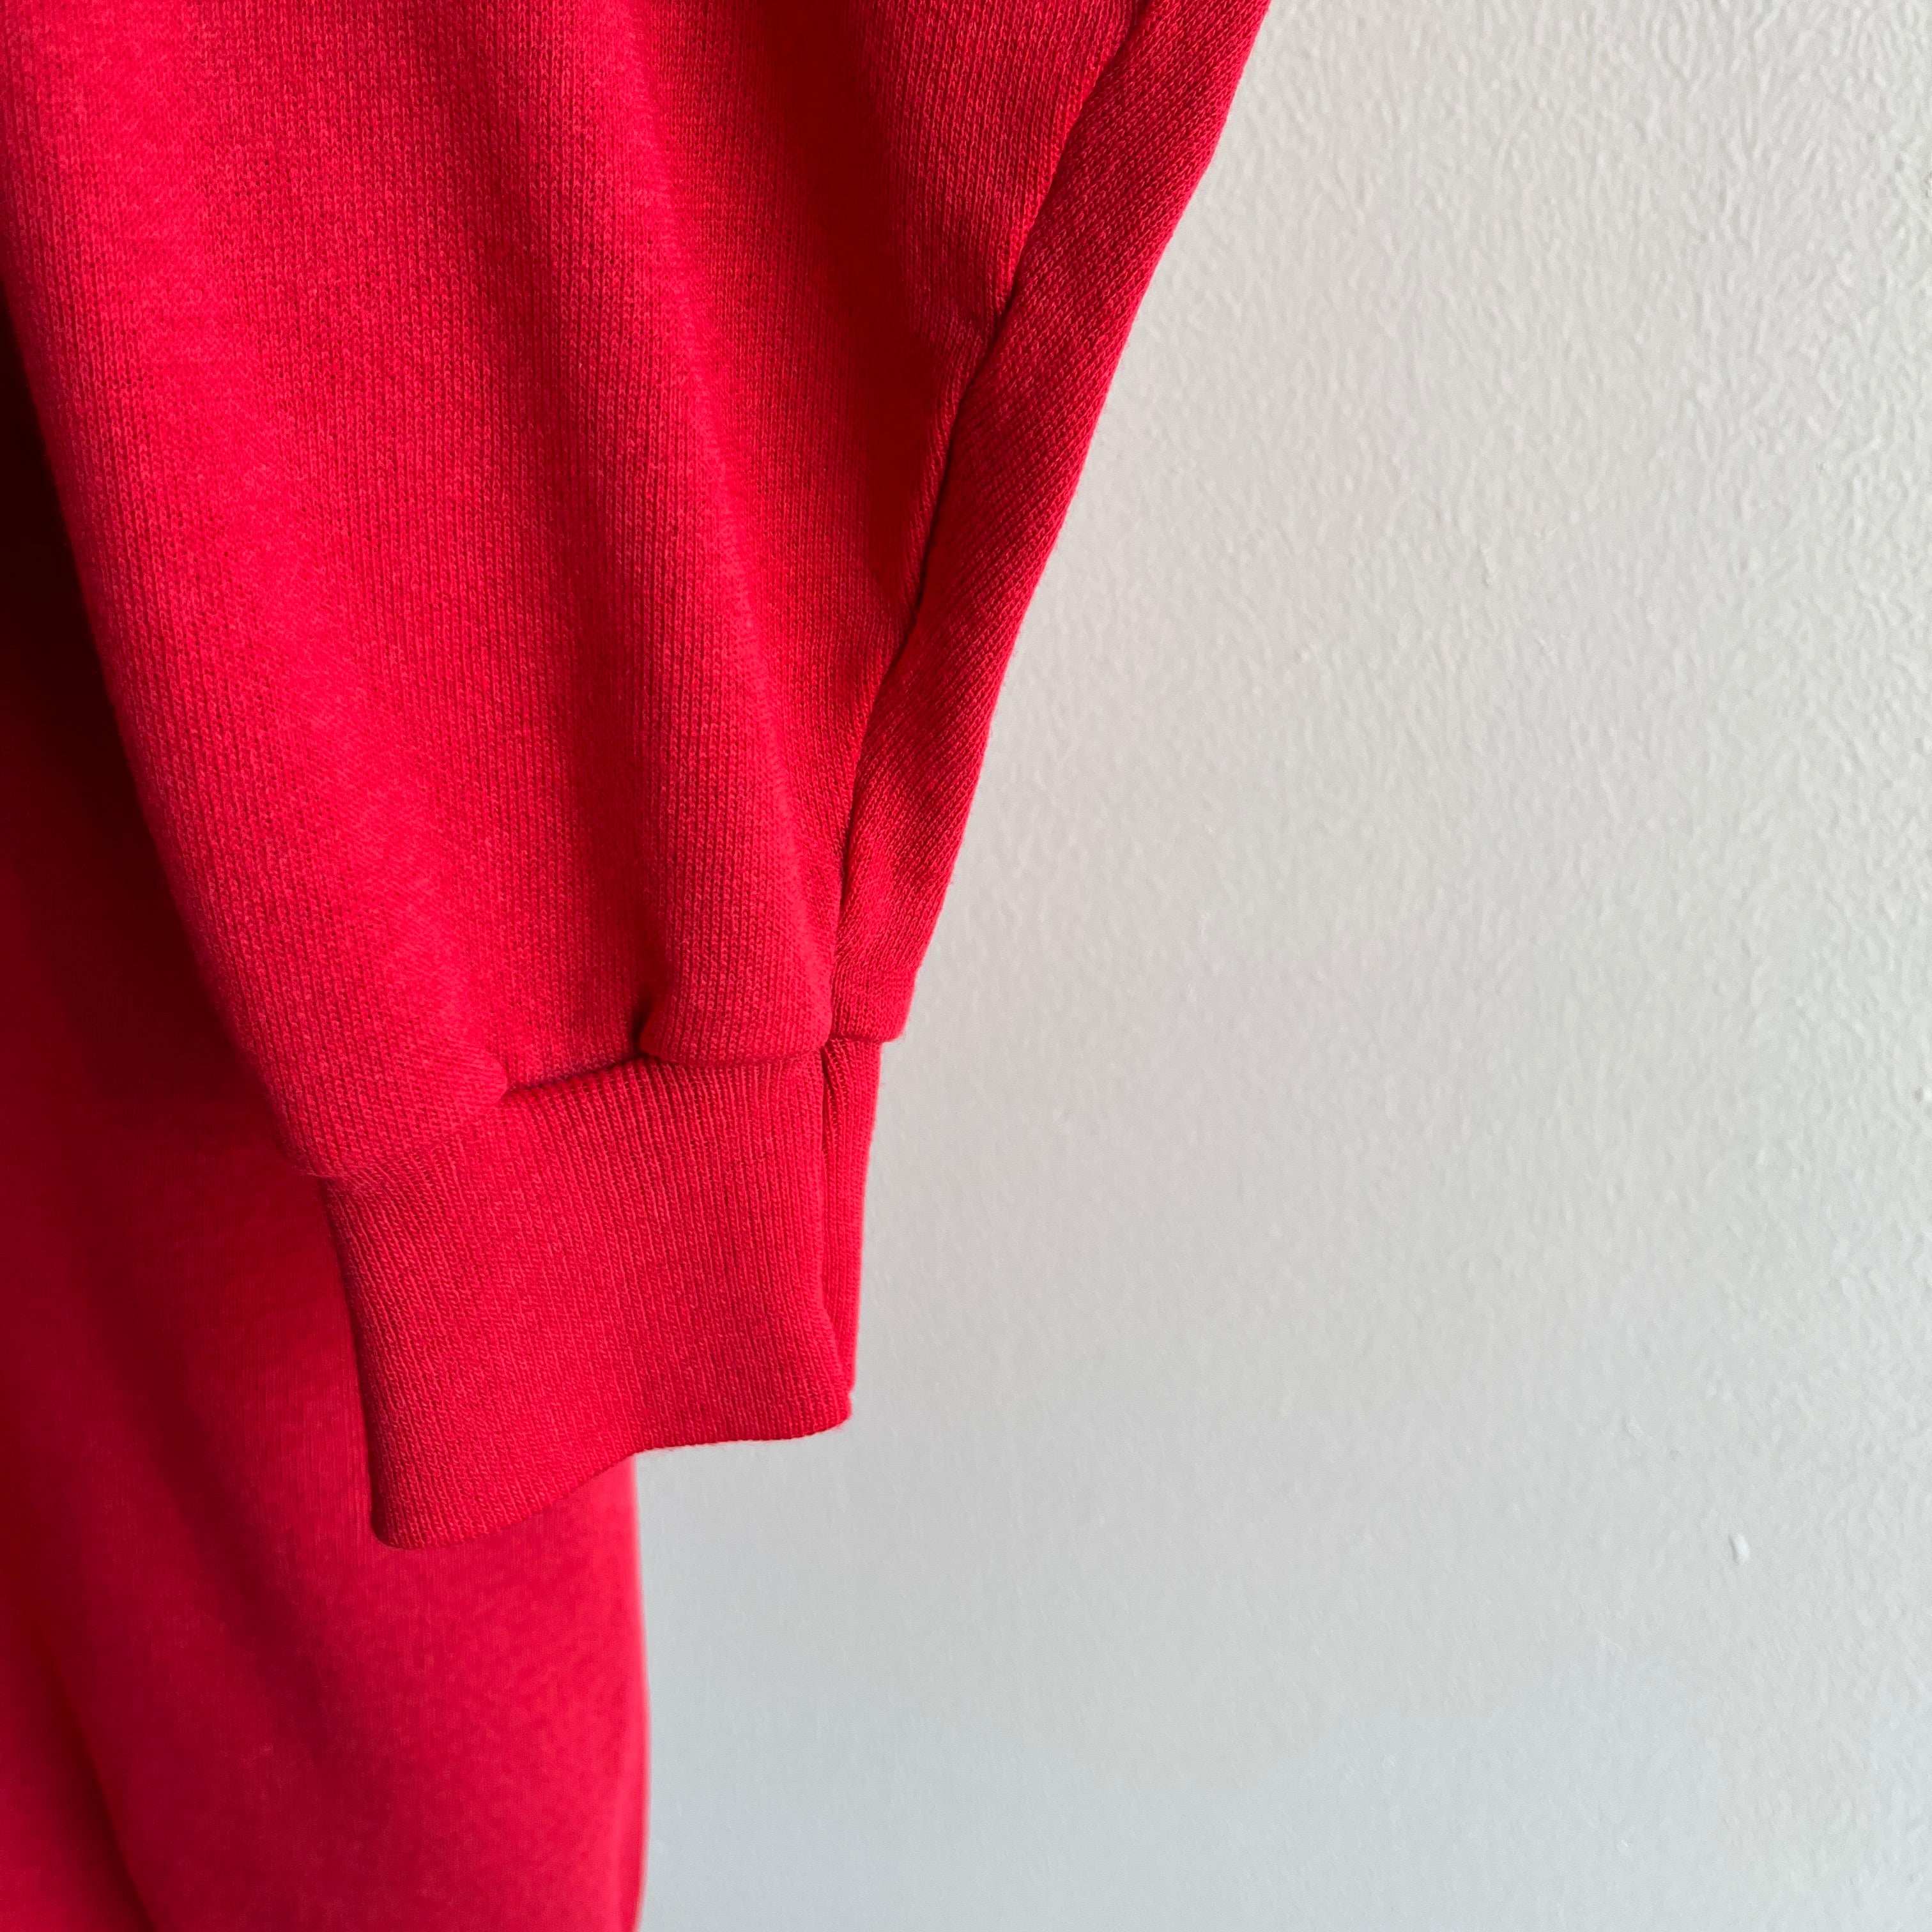 1980s Almost Paper Thin Slouchy Pinot Red Raglan Sweatshirt